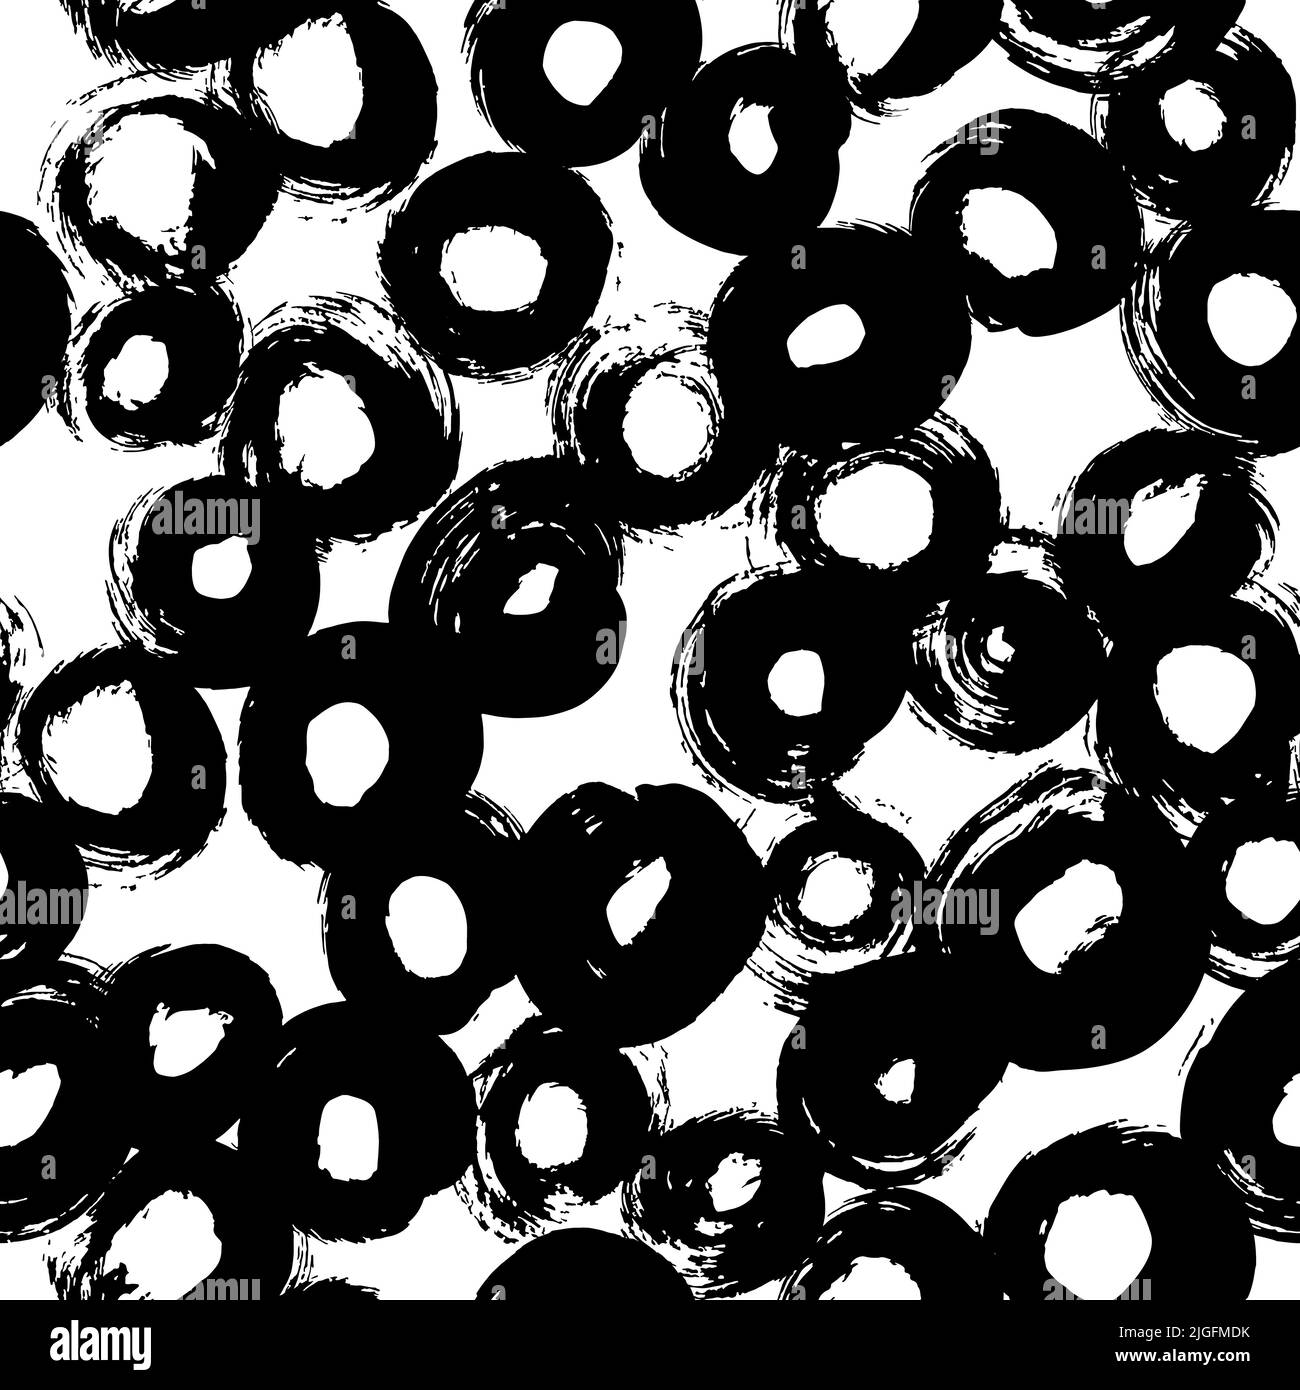 Hand drawn grunge black circles seamless pattern. Stock Vector